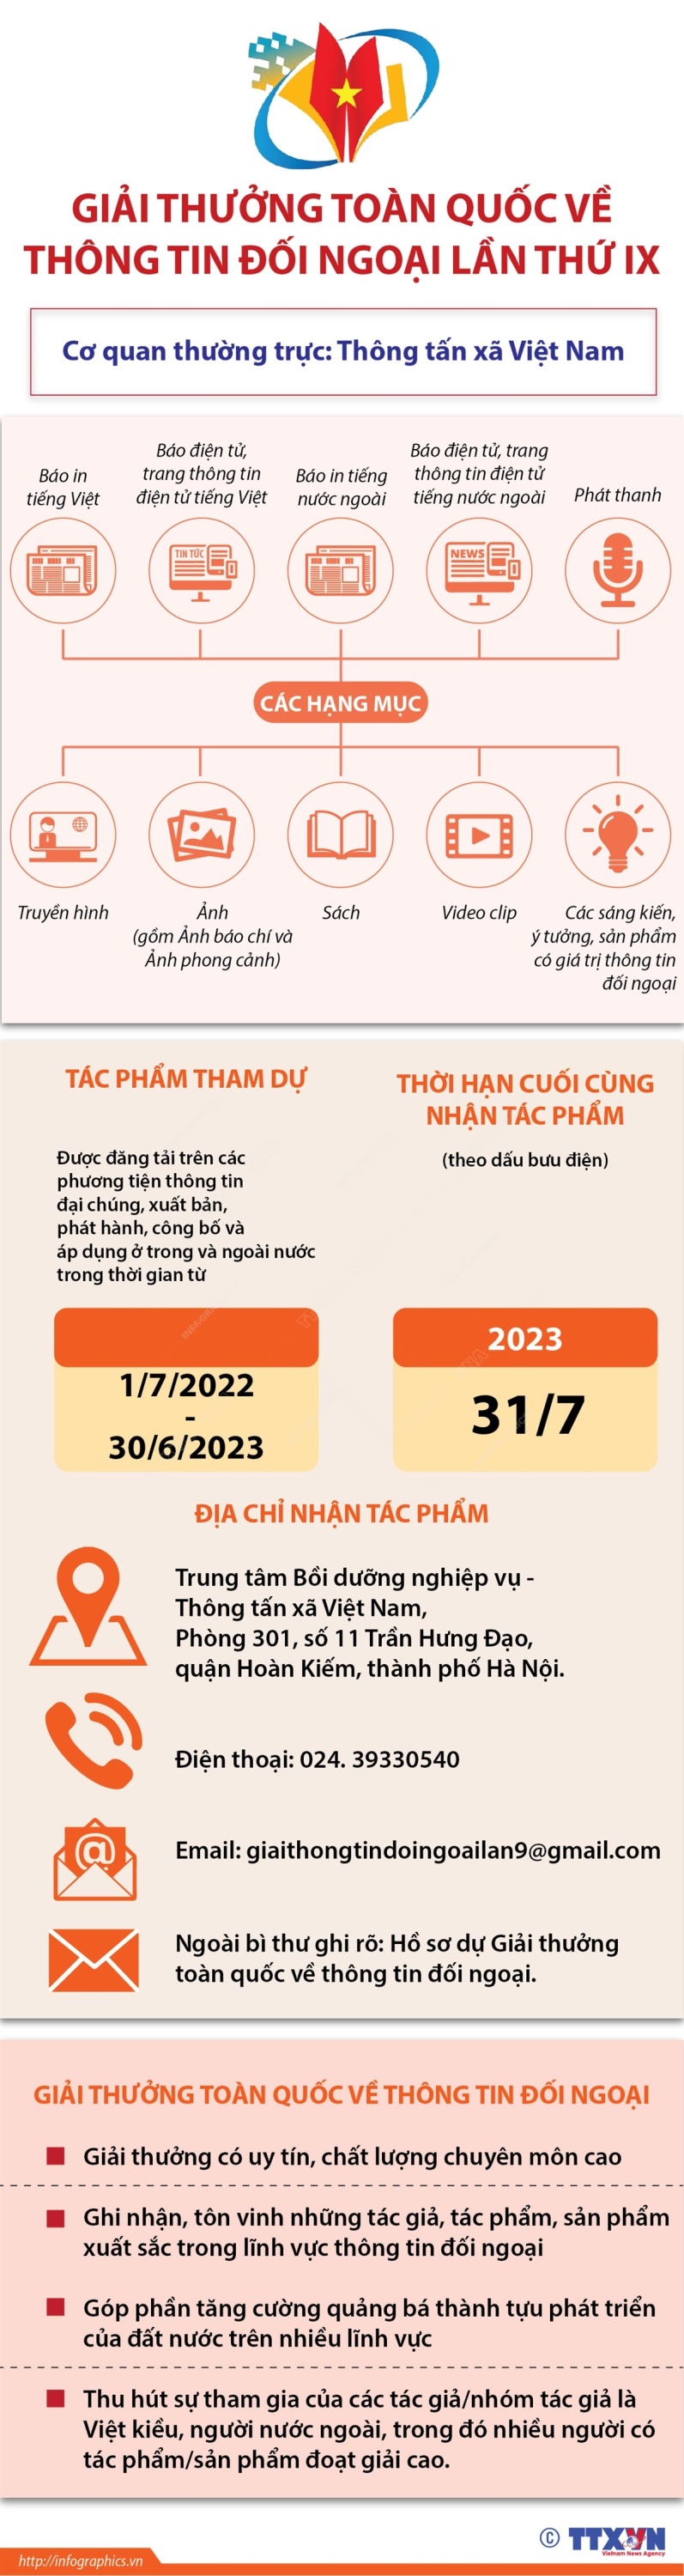 vna potal the le tham du giai thuong toan quoc ve thong tin doi ngoai lan thu ix 183855418